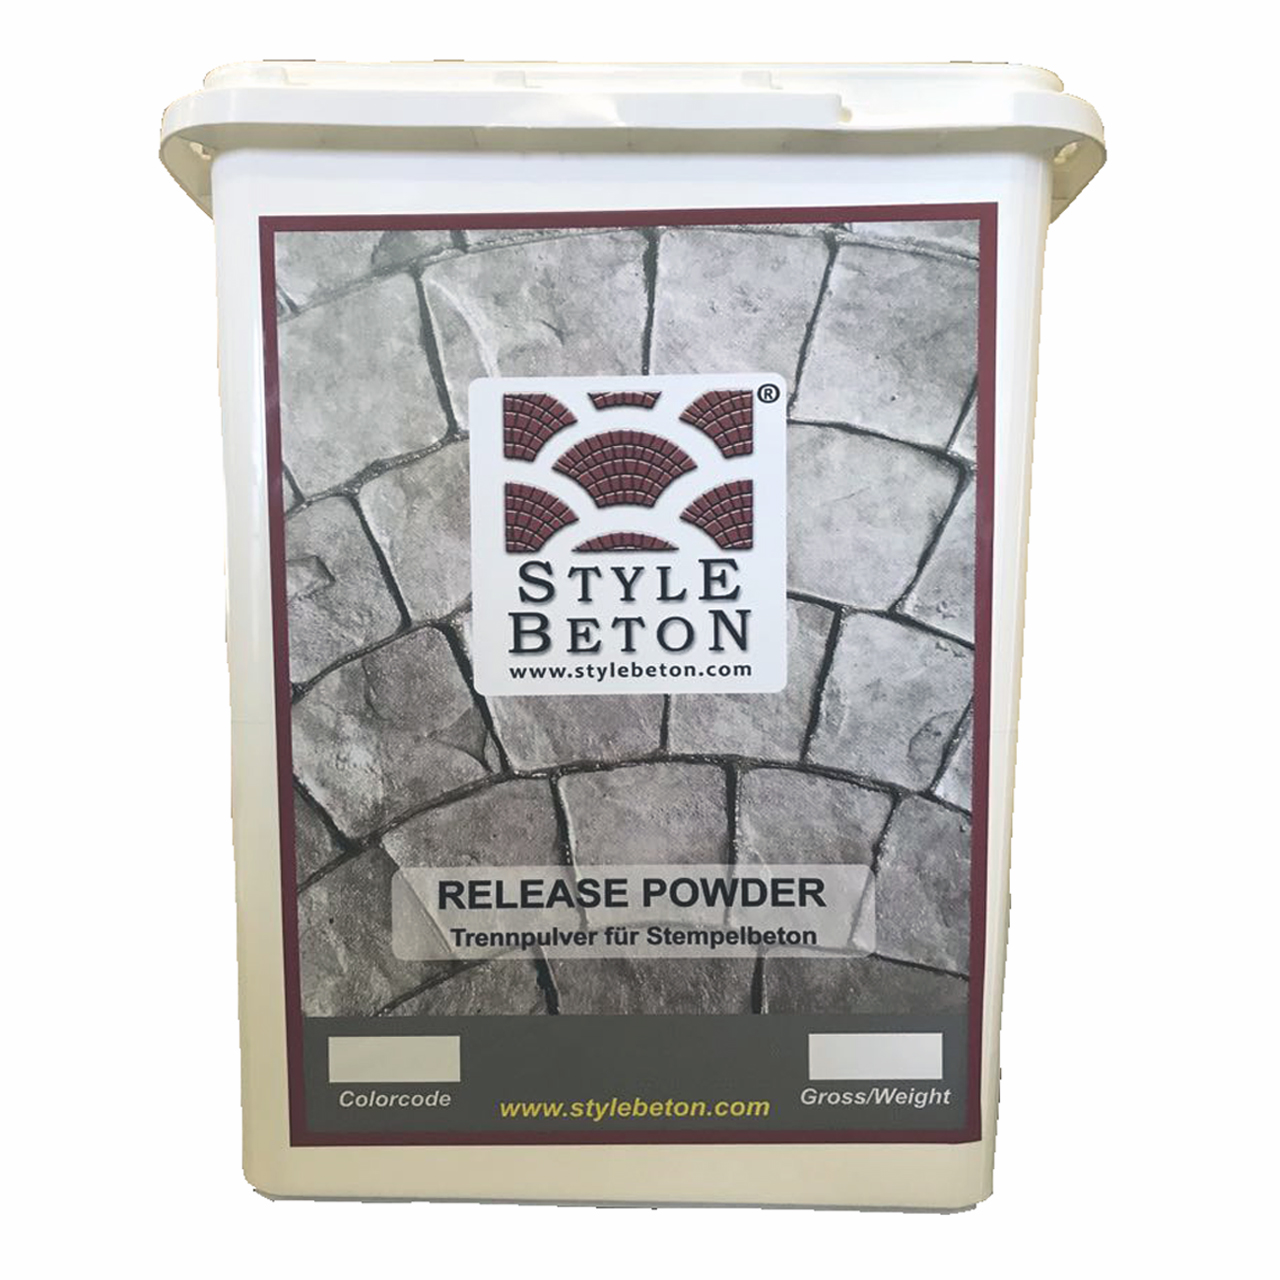 Style Beton Release Powder